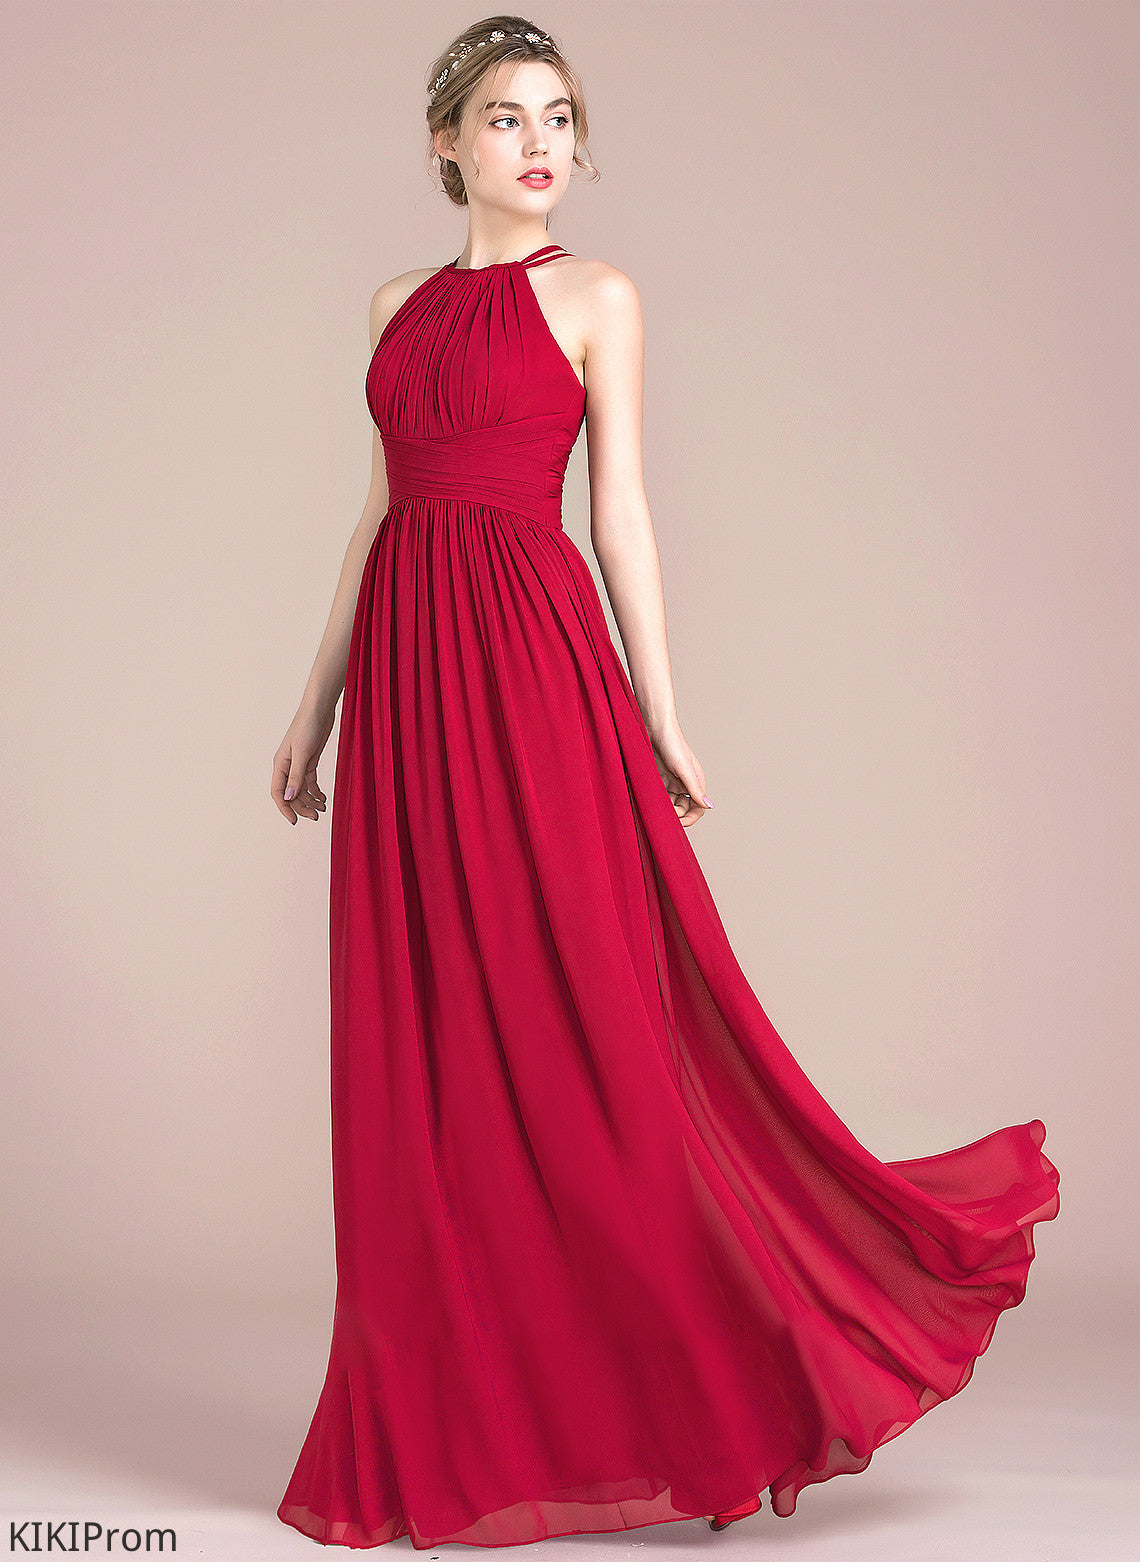 ScoopNeck Length Neckline Ruffle A-Line Floor-Length Silhouette Fabric Embellishment Emely Bridesmaid Dresses